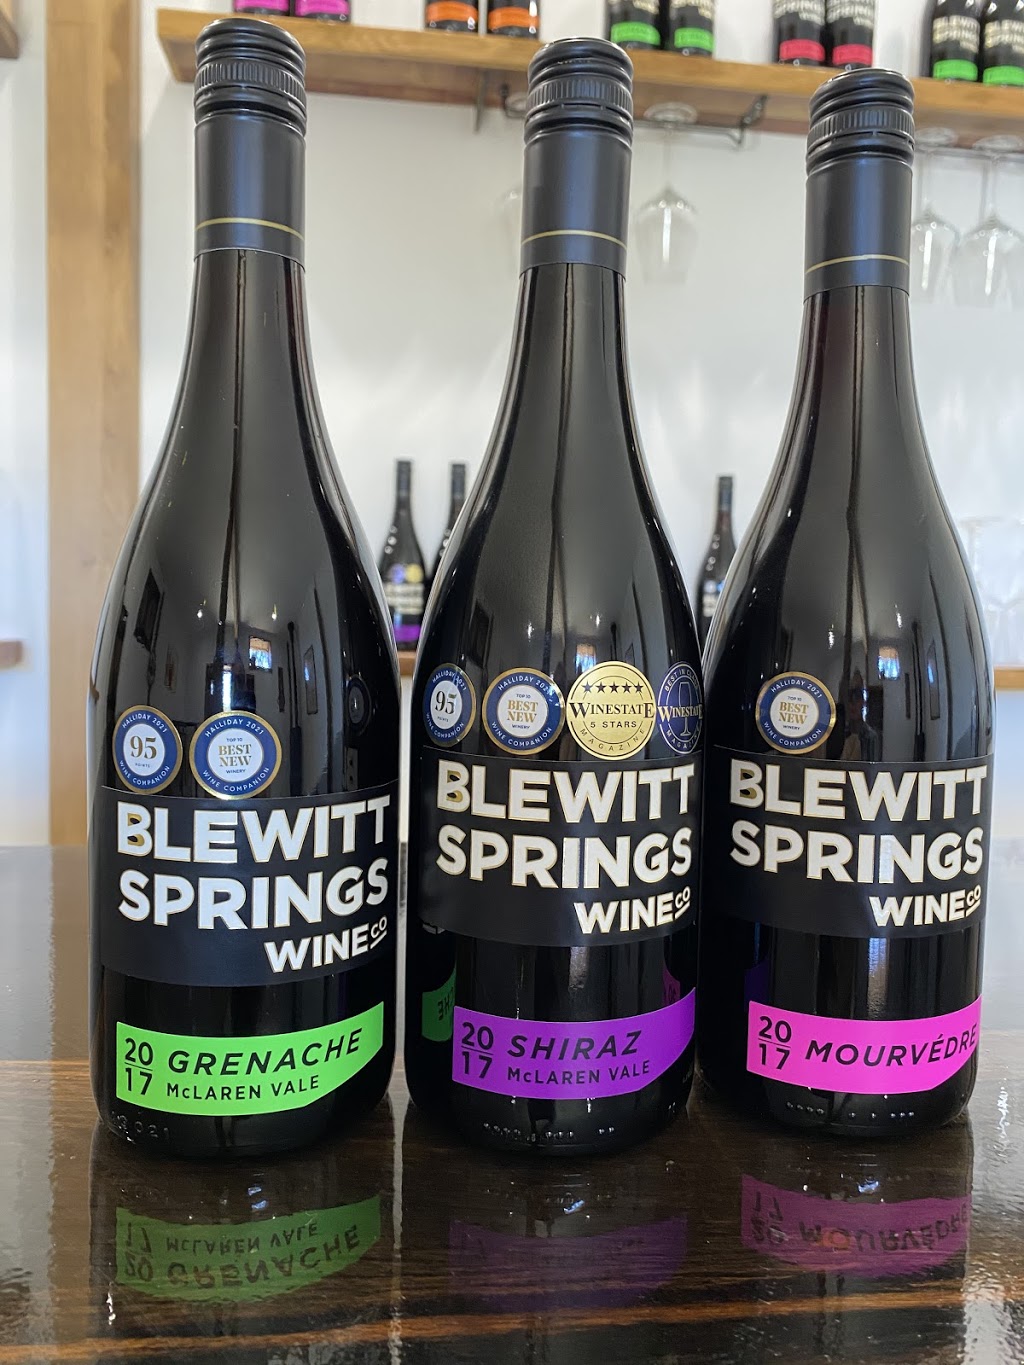 Blewitt springs wine co | food | 477 Blewitt Springs Rd, Blewitt Springs SA 5171, Australia | 0402106240 OR +61 402 106 240